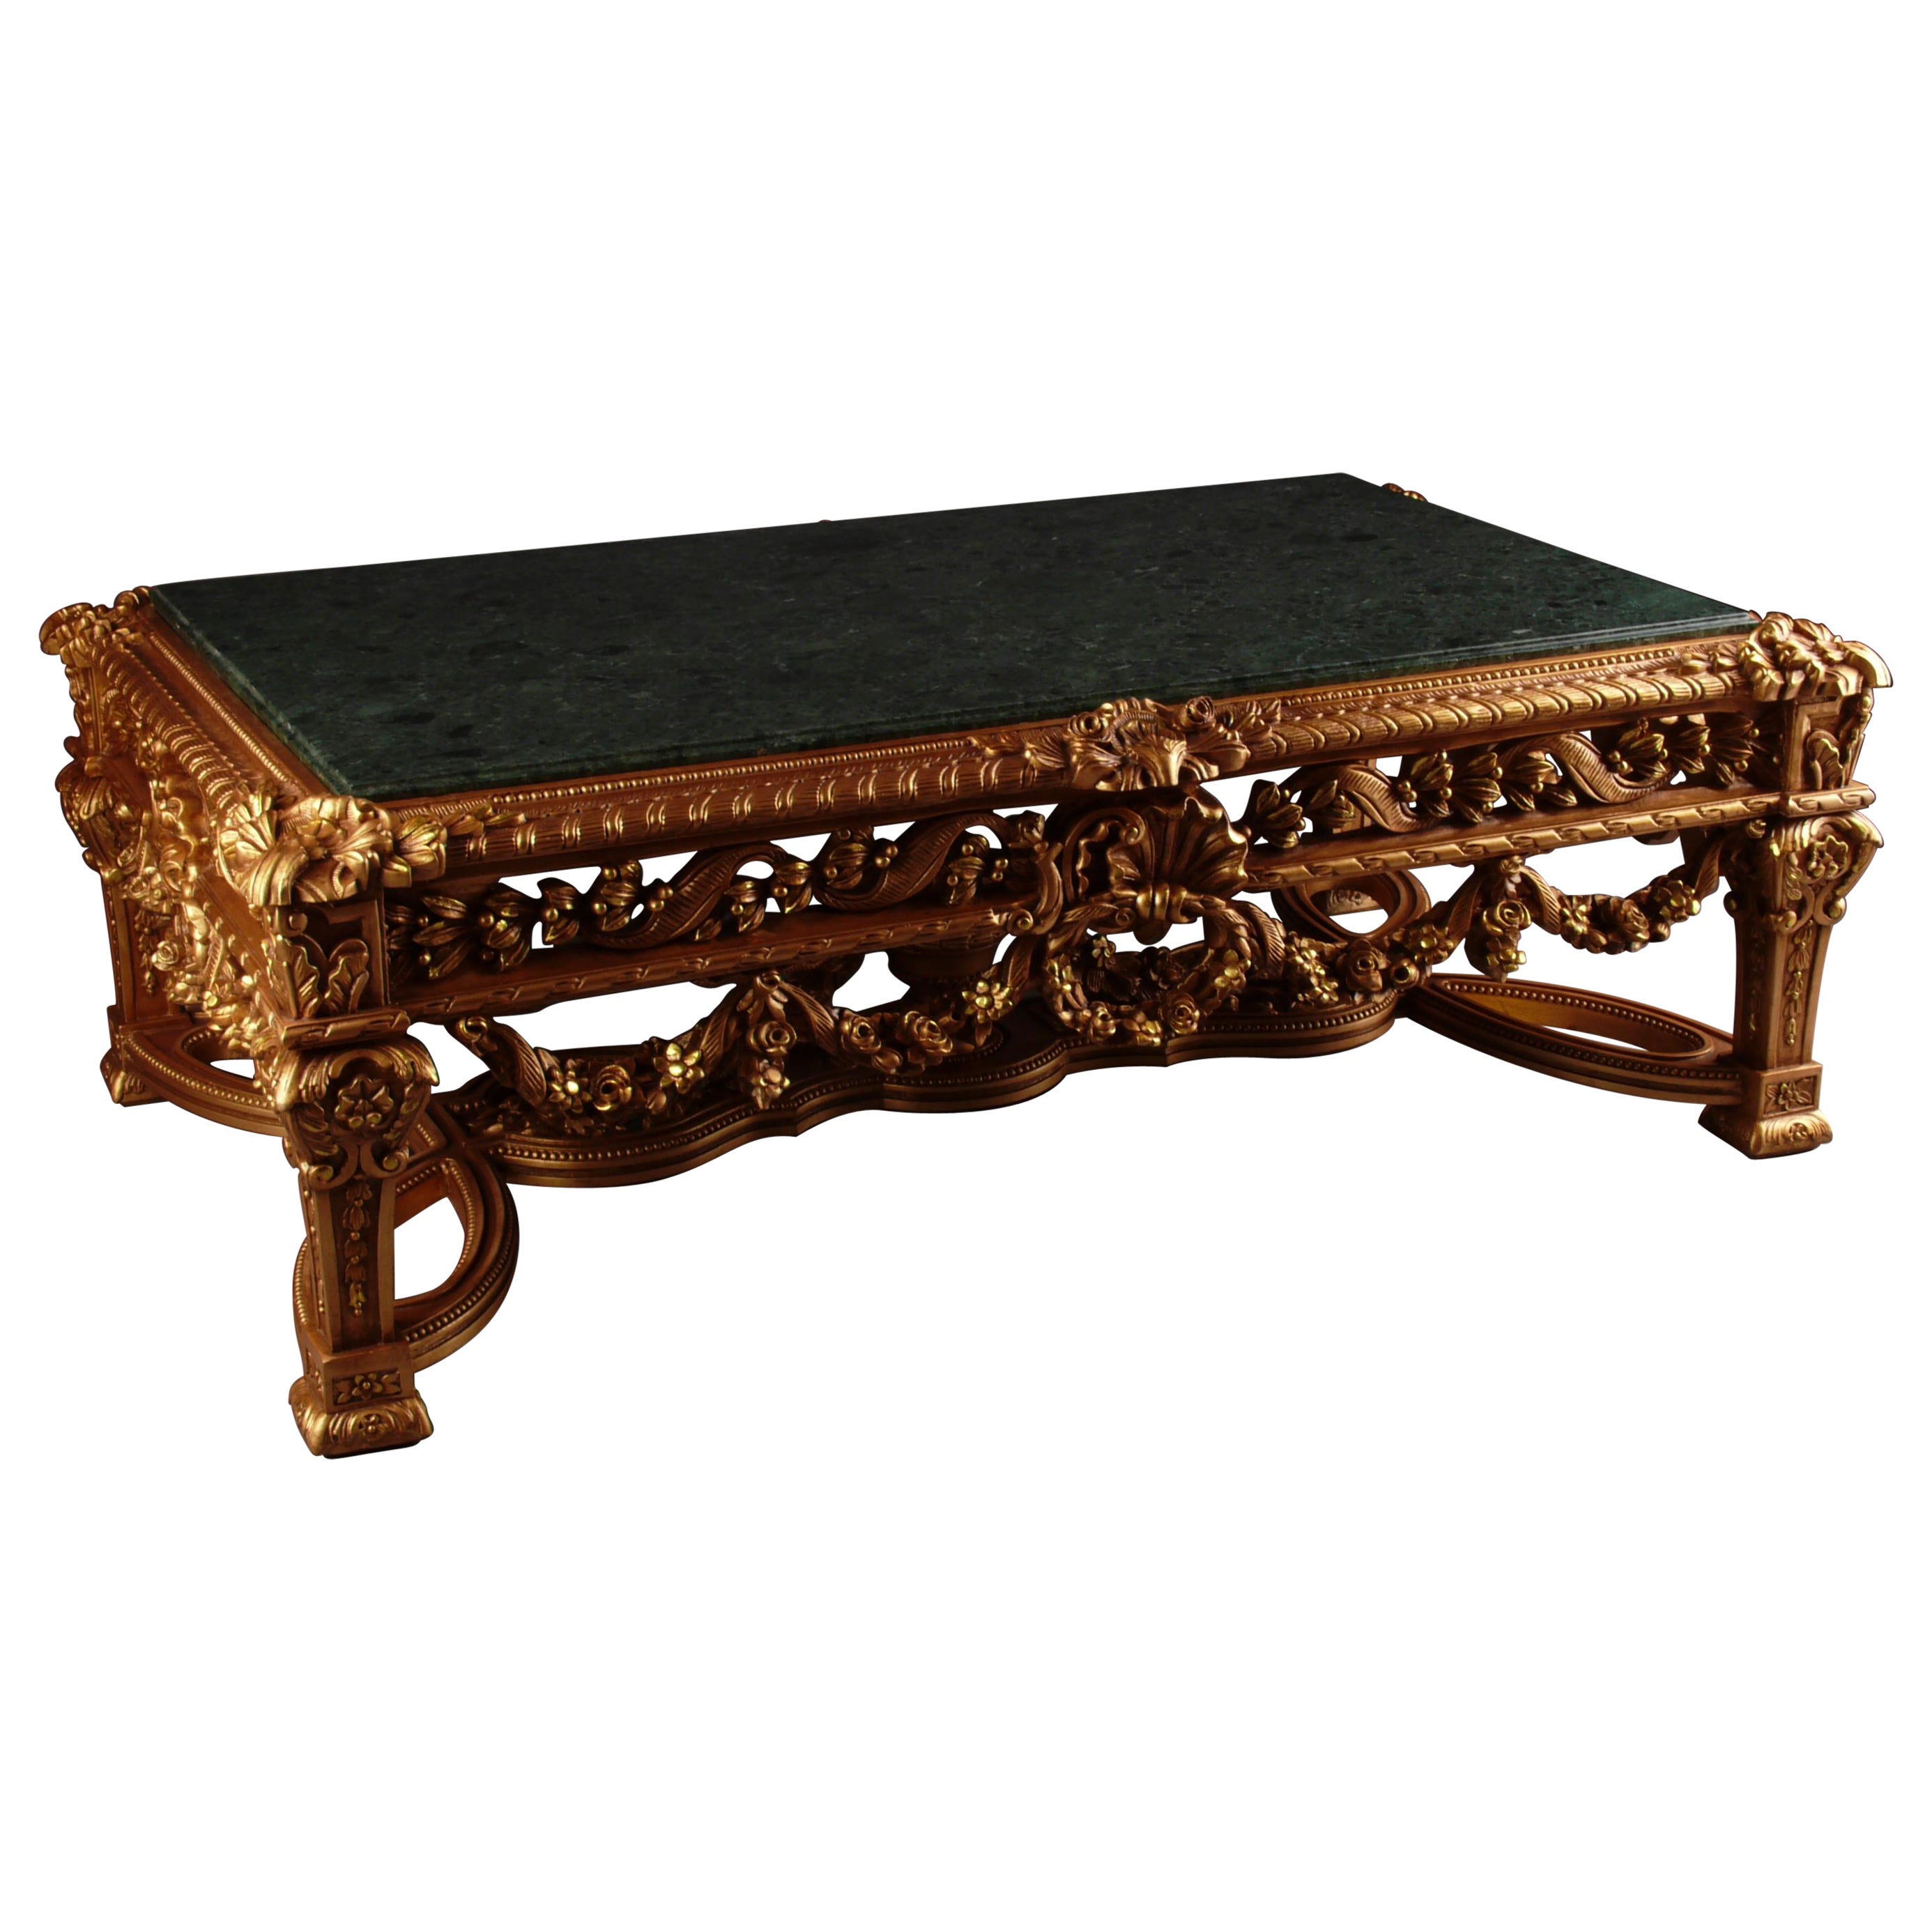 20th Century Louis XVI Style Pomp-Salon Coffee Table, Solid Beech Wood